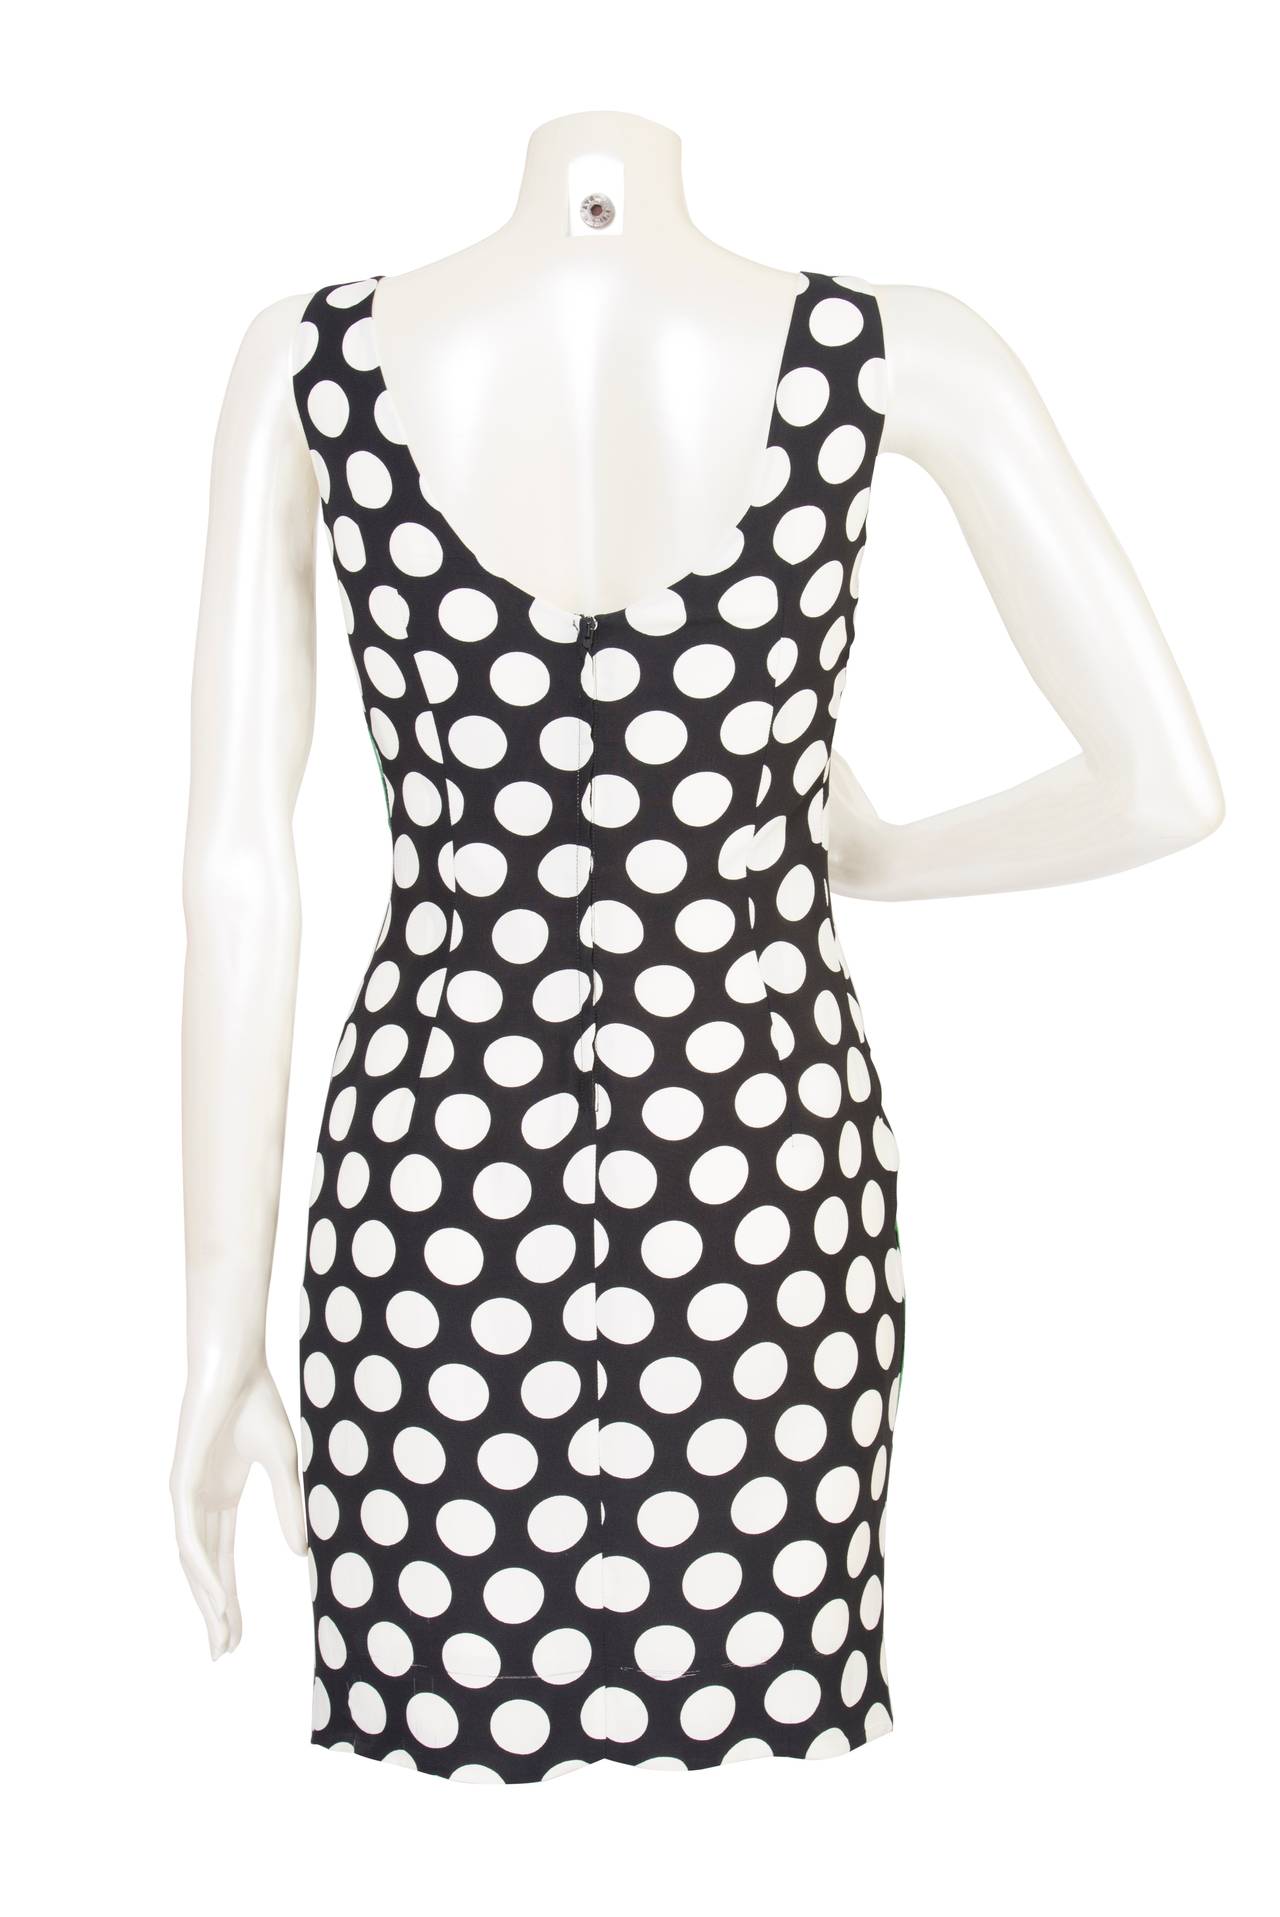 Moschino Dresses | eBay